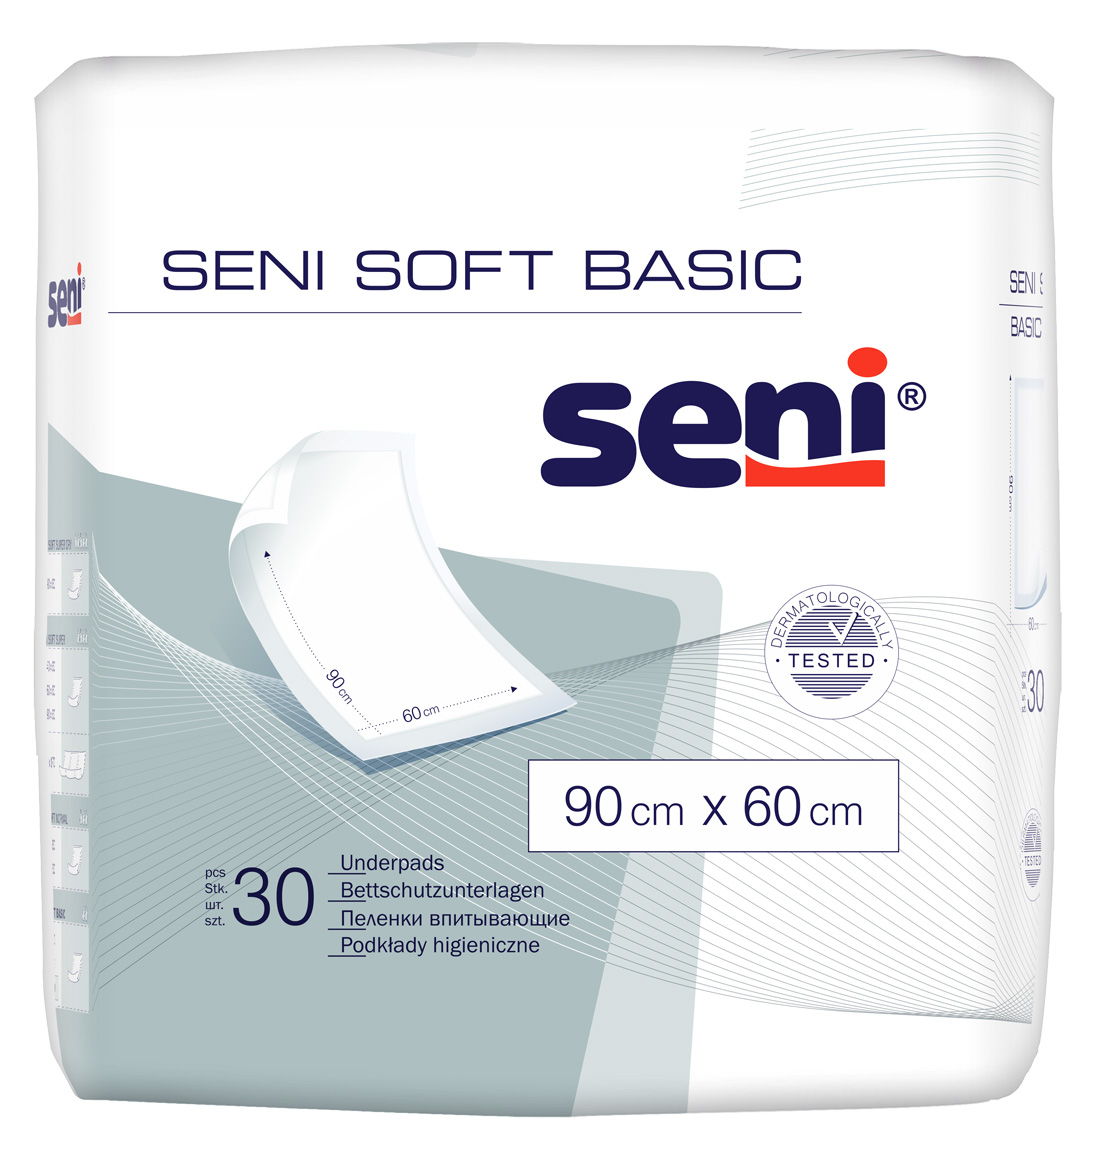 Seni Soft Basic 90x60 cm - 30 Stück